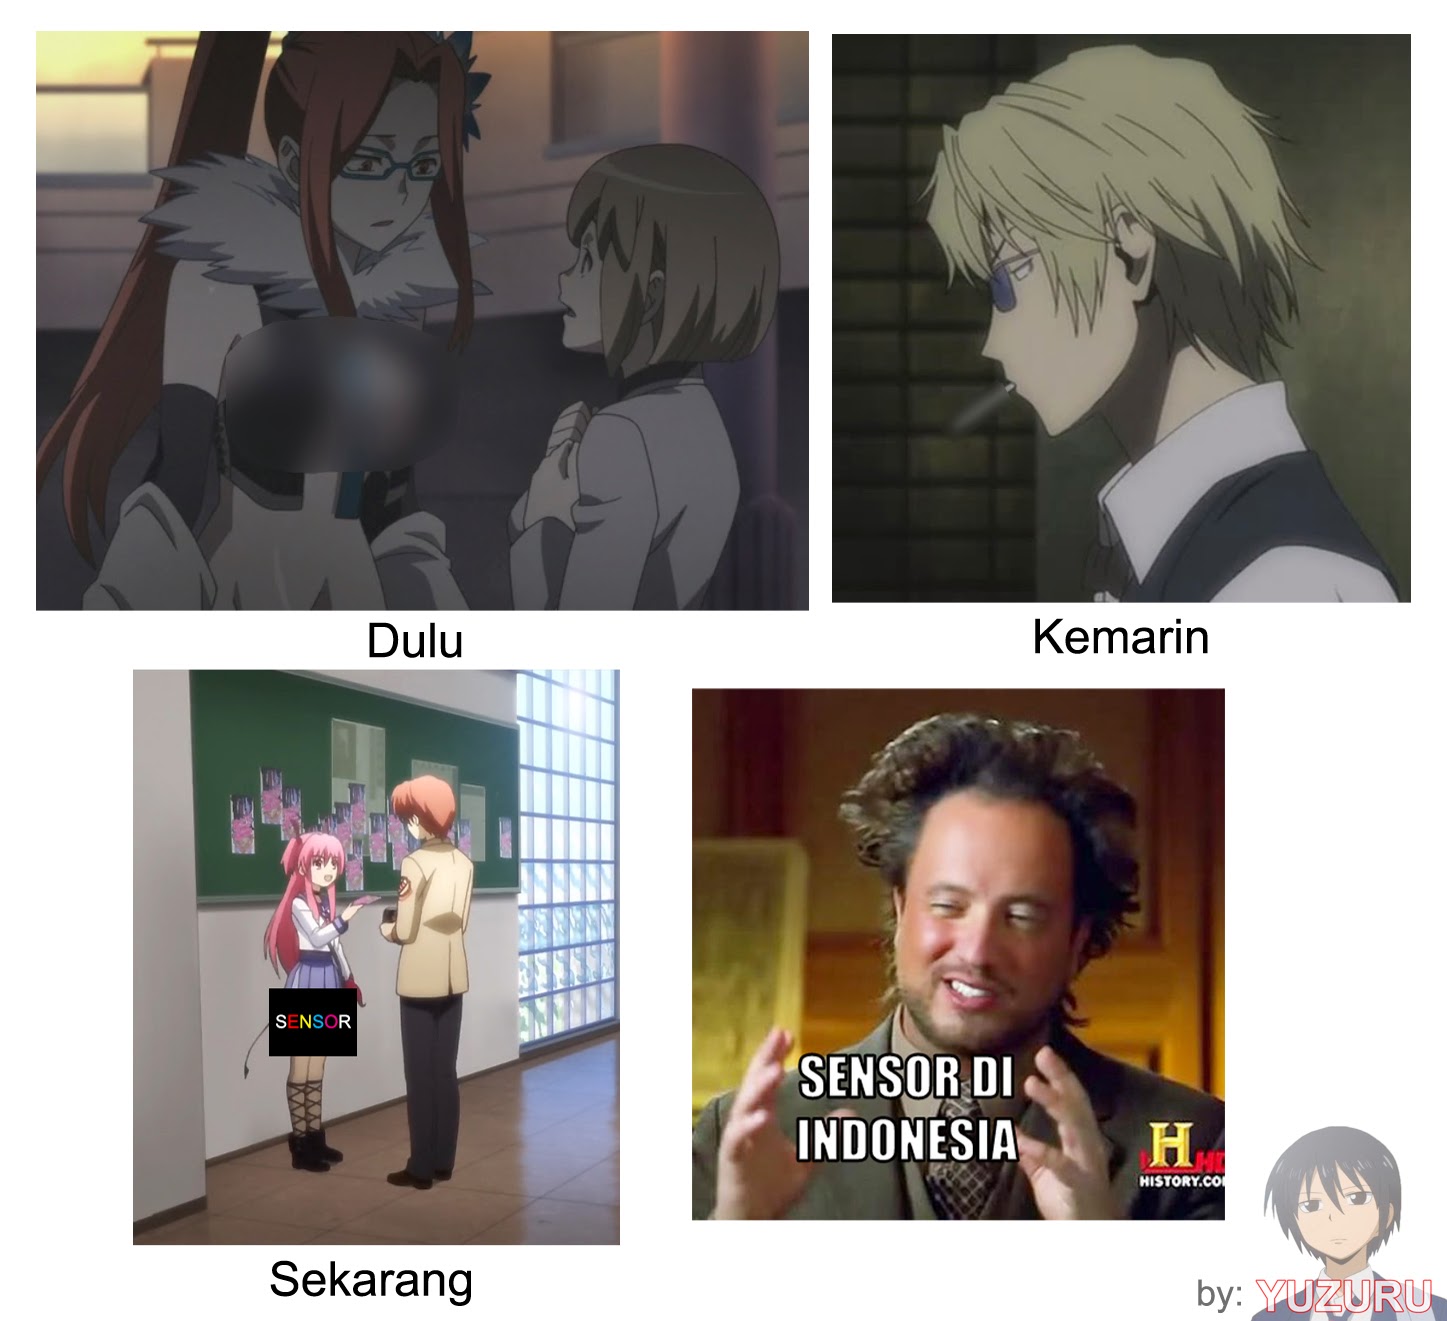 Kumpulan Meme Anime Lucu Indonesia Kumpulan Gambar DP BBM